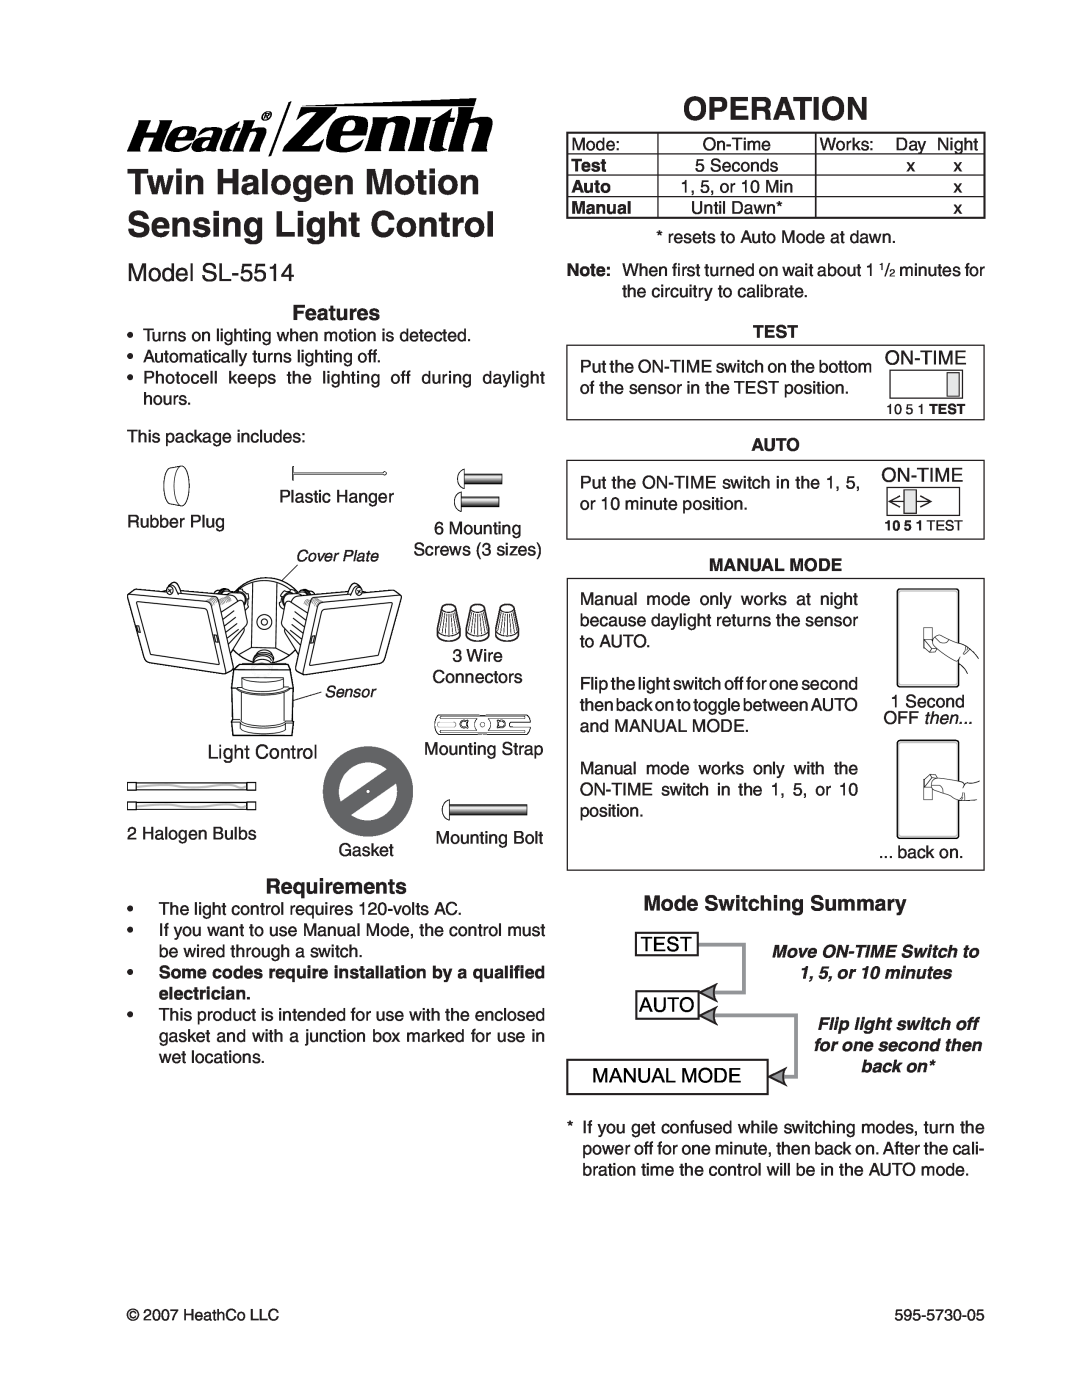 Heath Zenith manual Twin Halogen Motion Sensing Light Control, Operation, Model SL-5514, On-Time, Test, Auto, Manual 